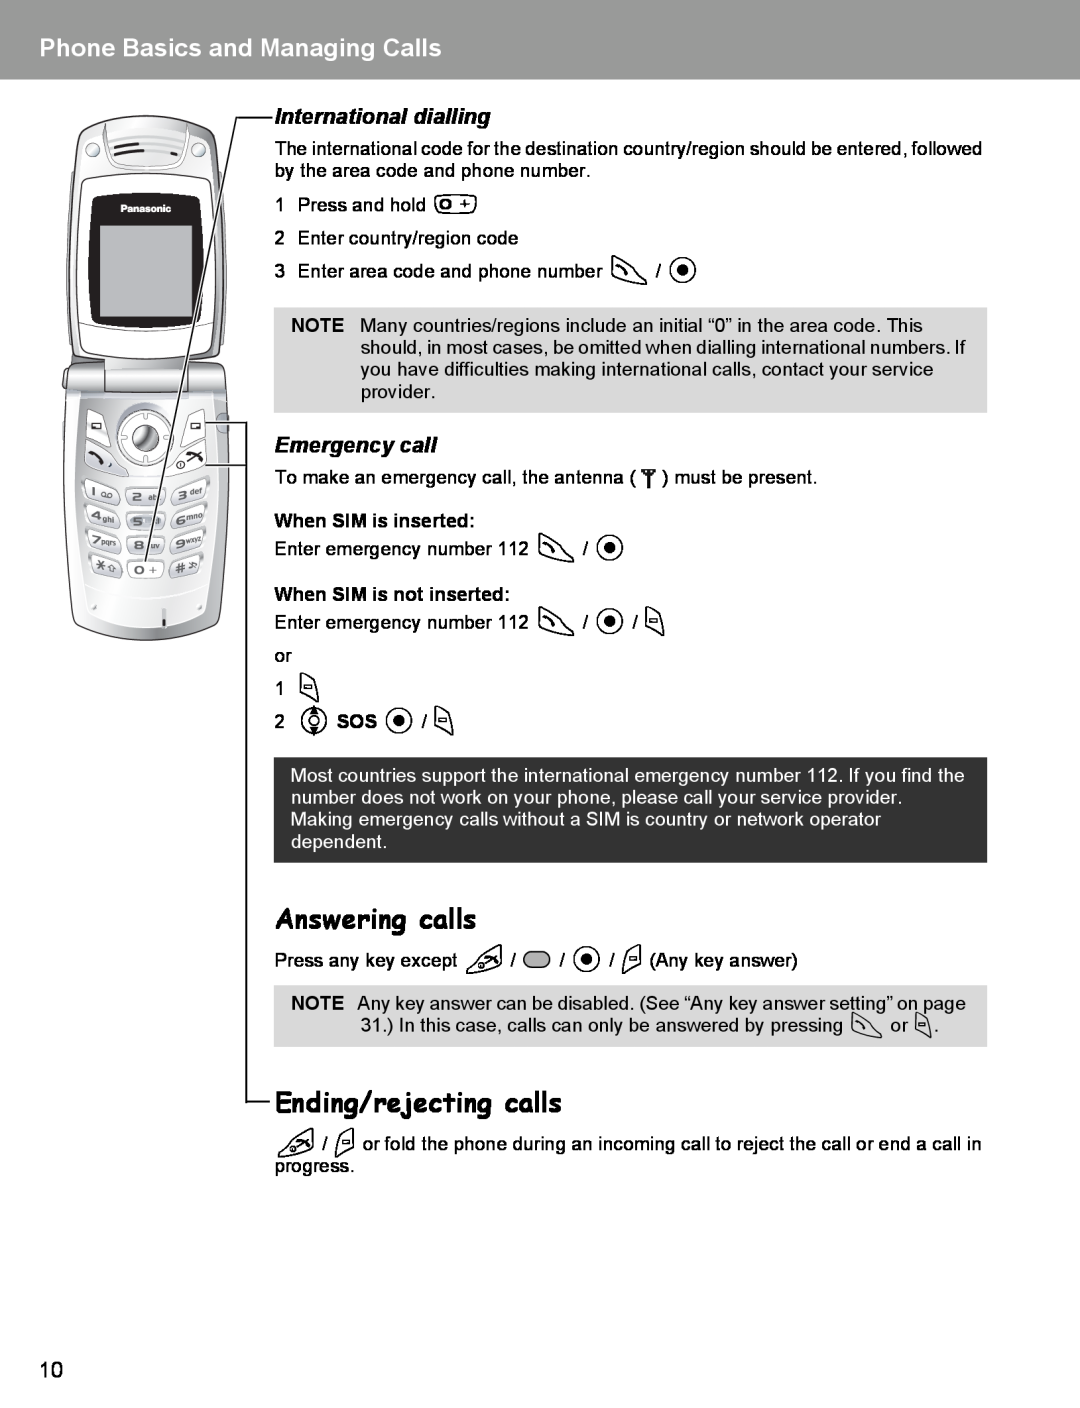 Panasonic EB-X400 Answering calls, Ending/rejecting calls, Phone Basics and Managing Calls, International dialling 